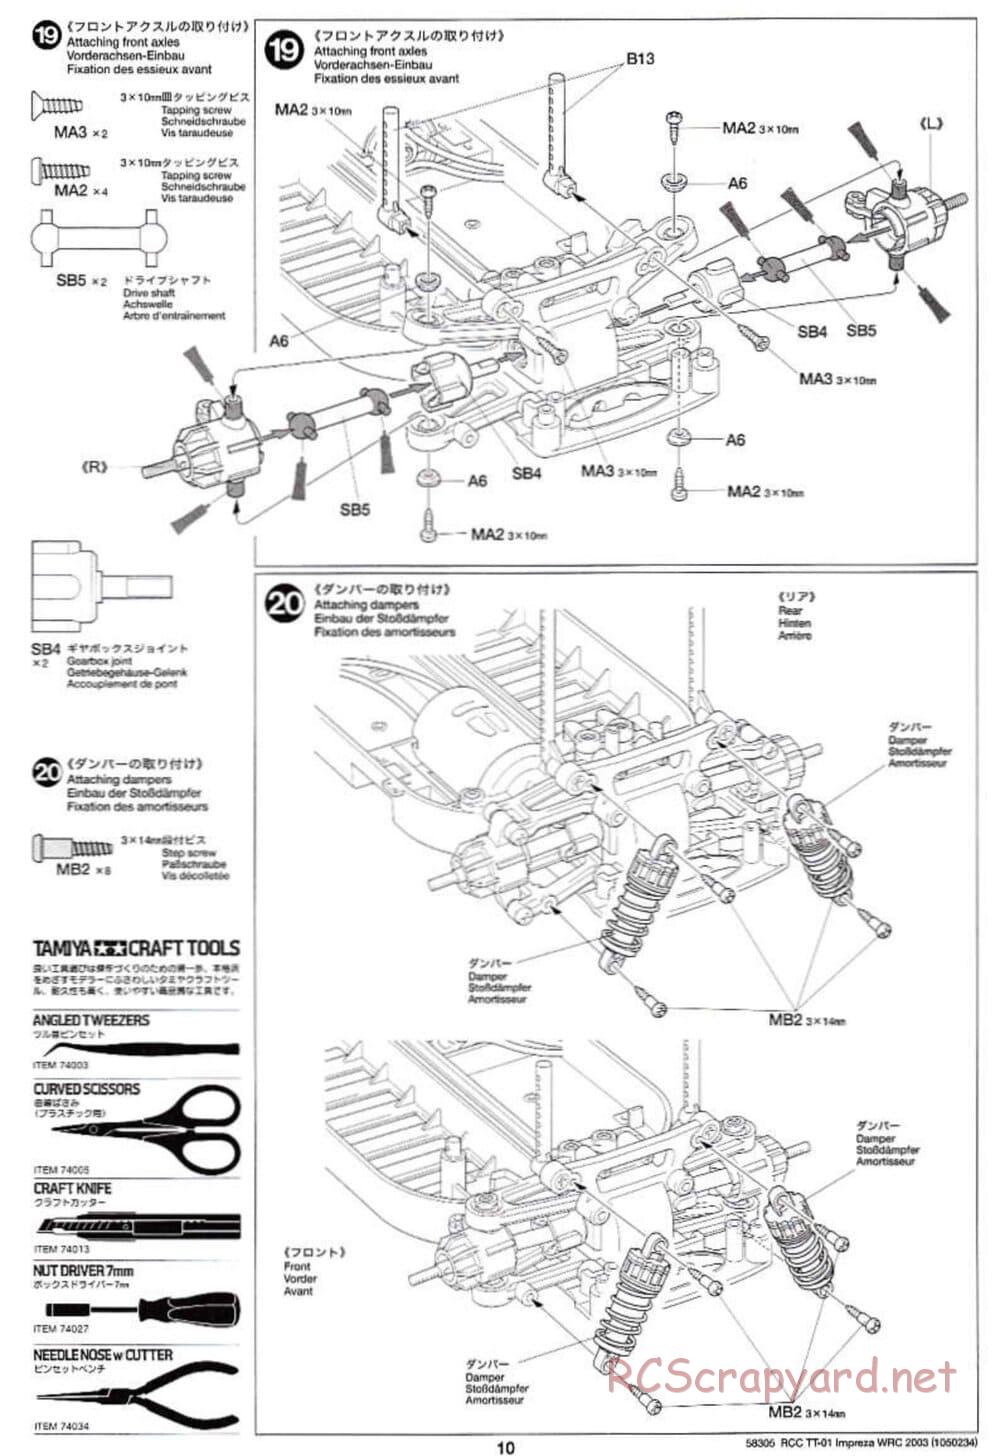 Tamiya - Subaru Impreza WRC 2003 - TT-01 Chassis - Manual - Page 10